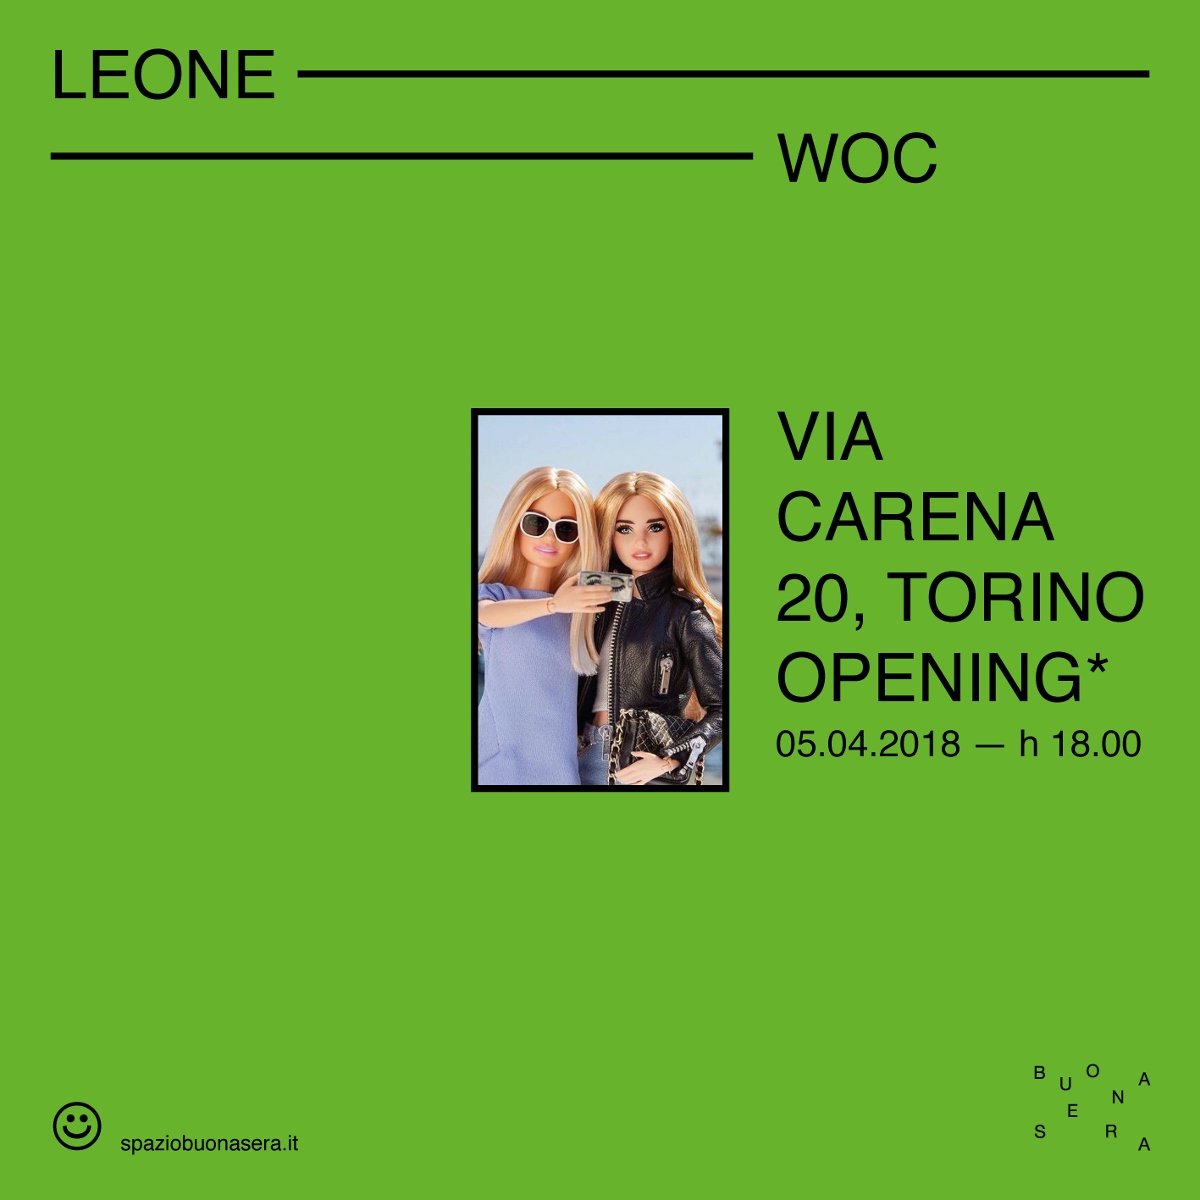 Woc – Leone